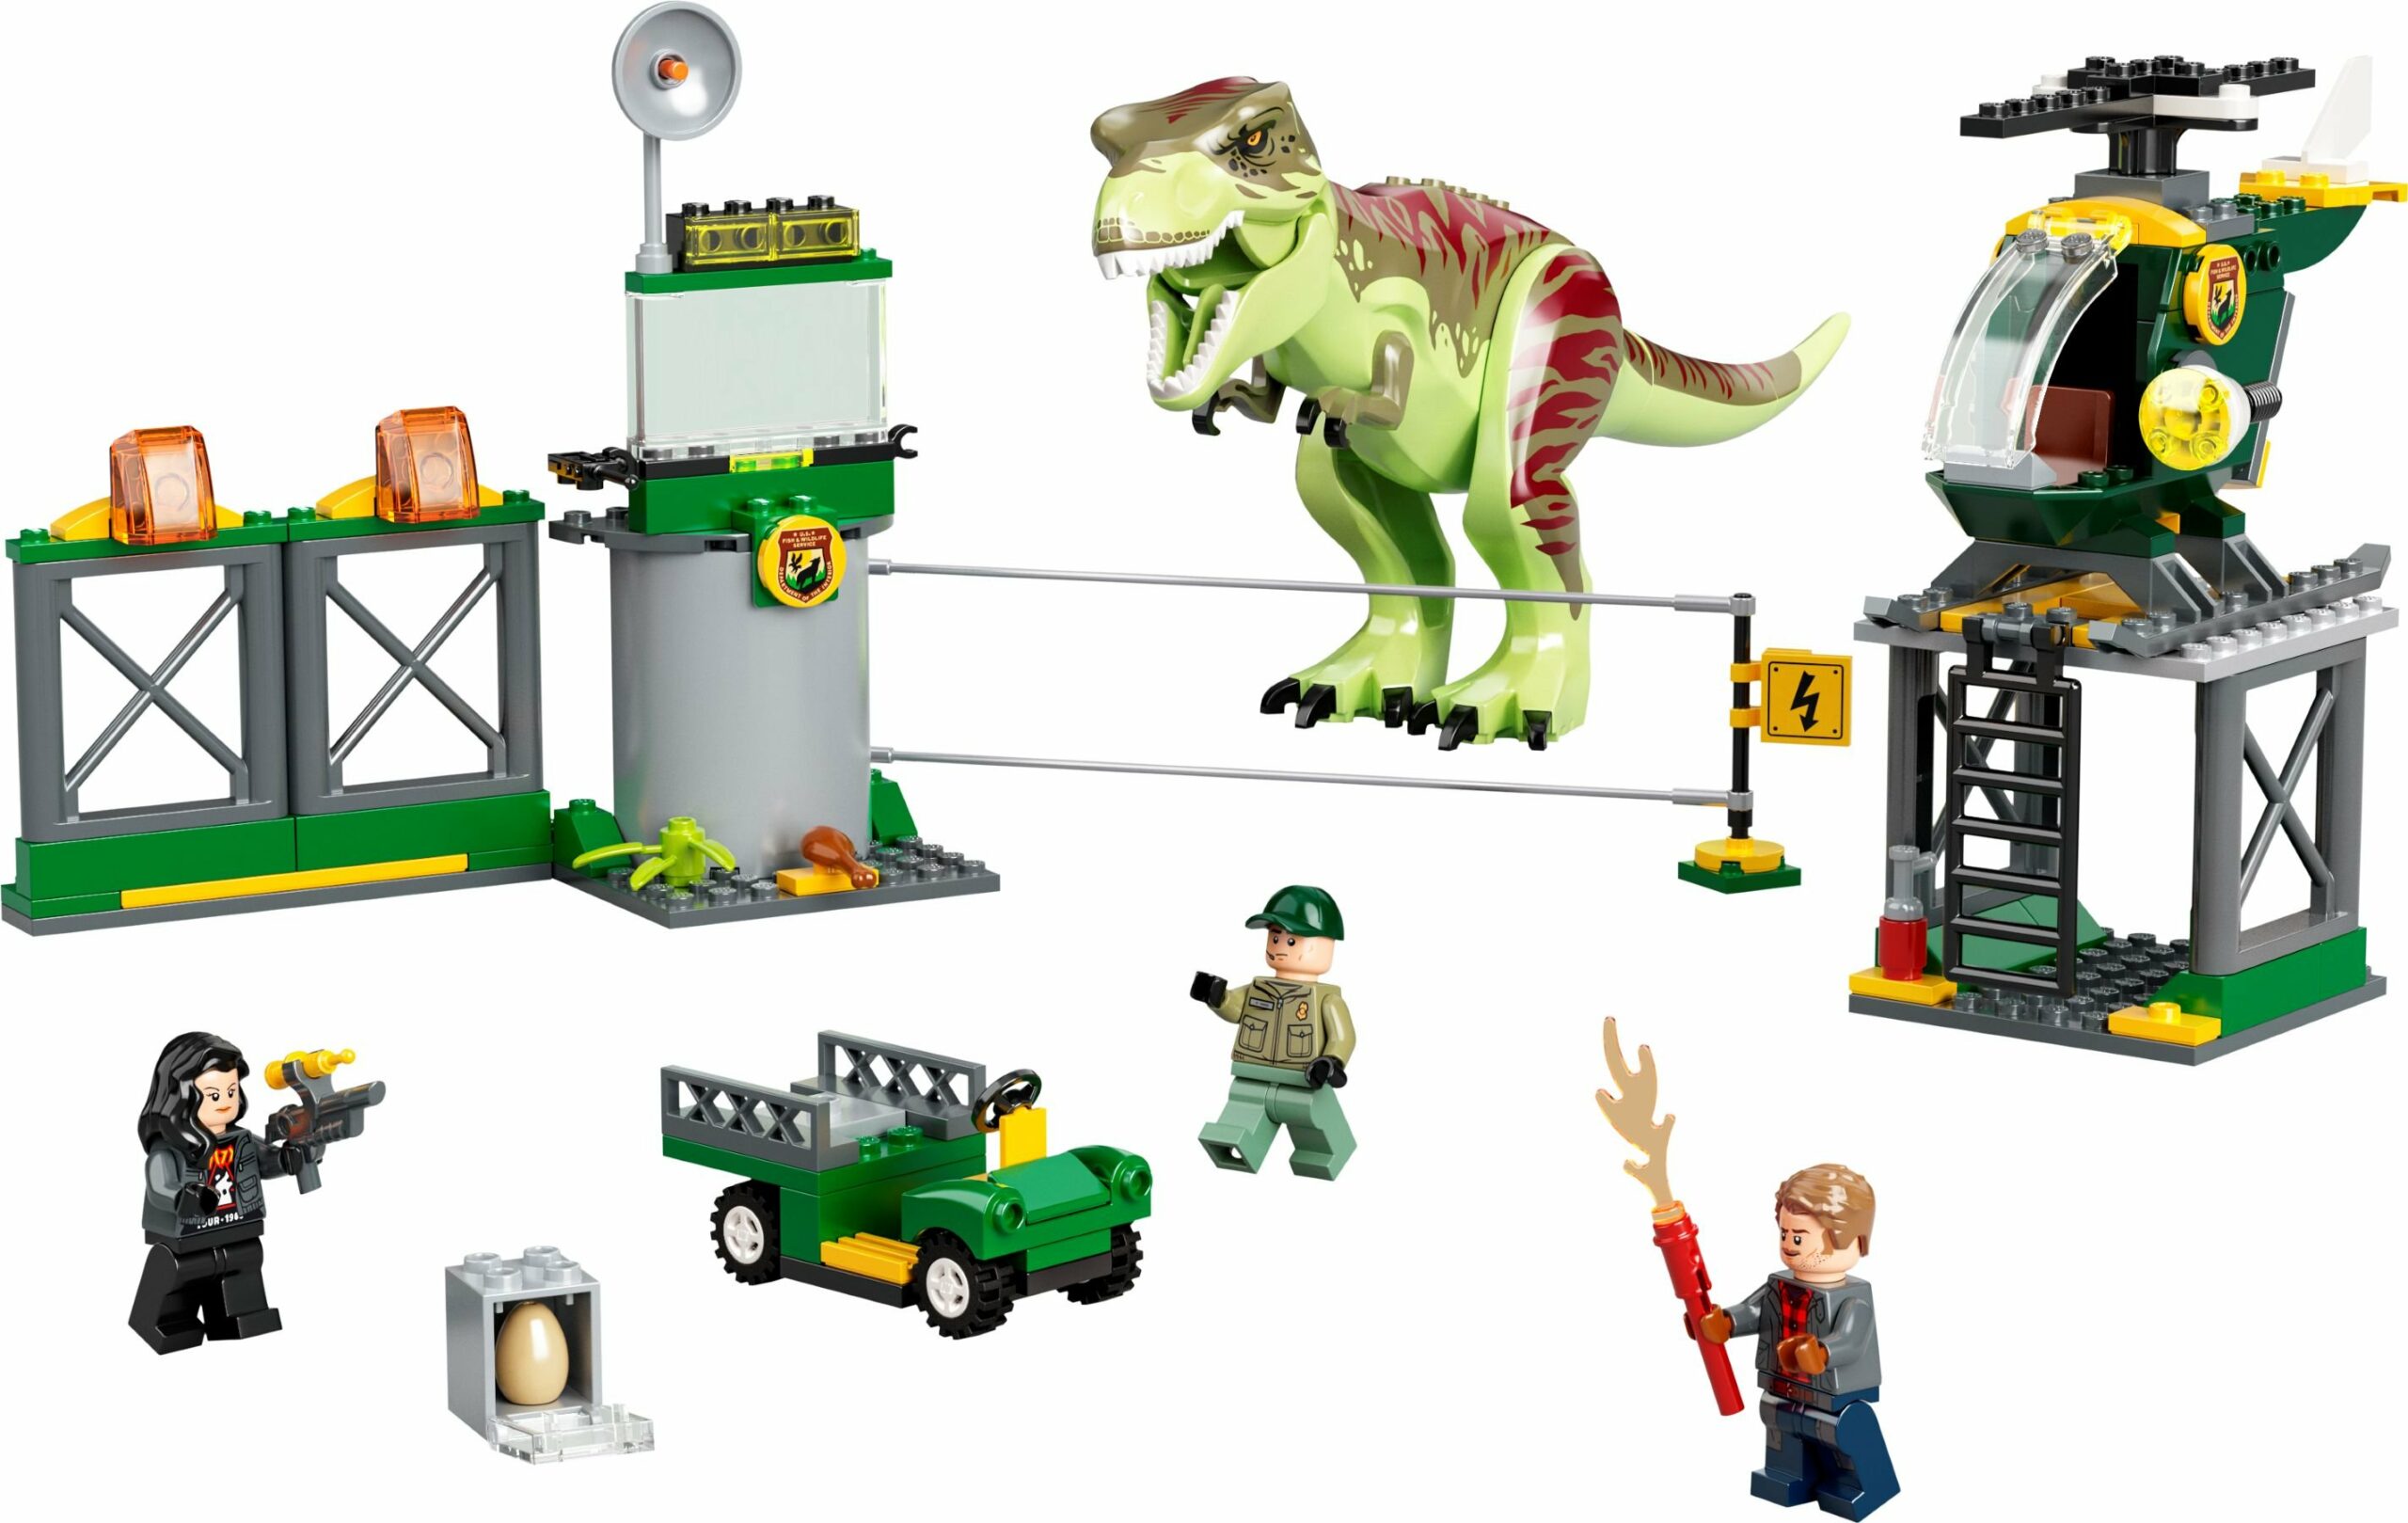 LEGO Jurassic World - T. Rex Ausbruch 76944